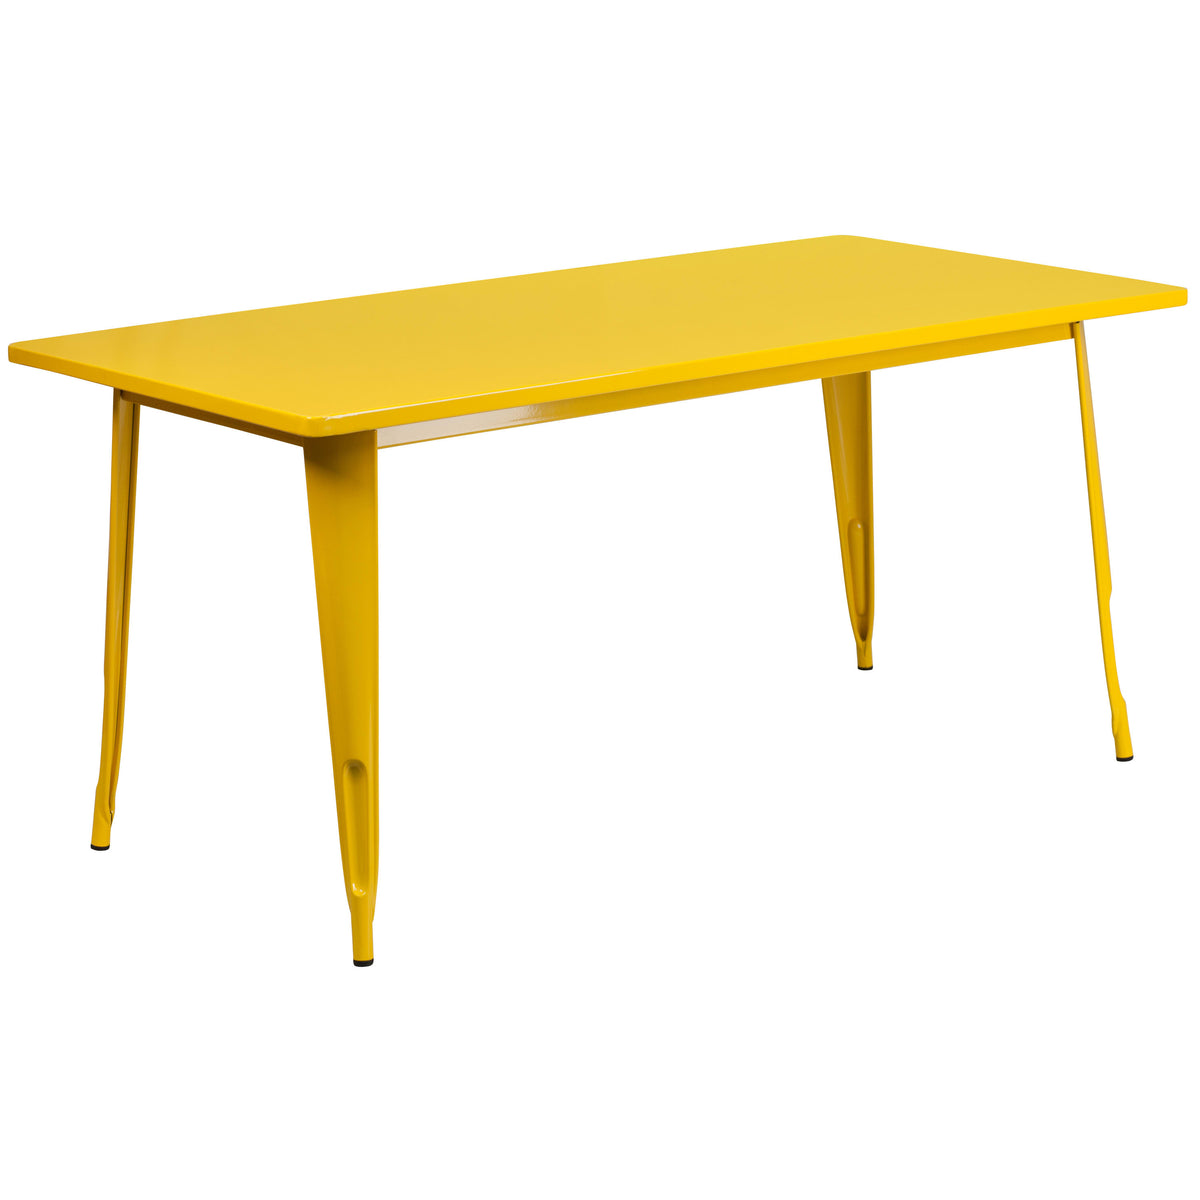 Yellow |#| 31.5inch x 63inch Rectangular Yellow Metal Indoor-Outdoor Table - Industrial Table